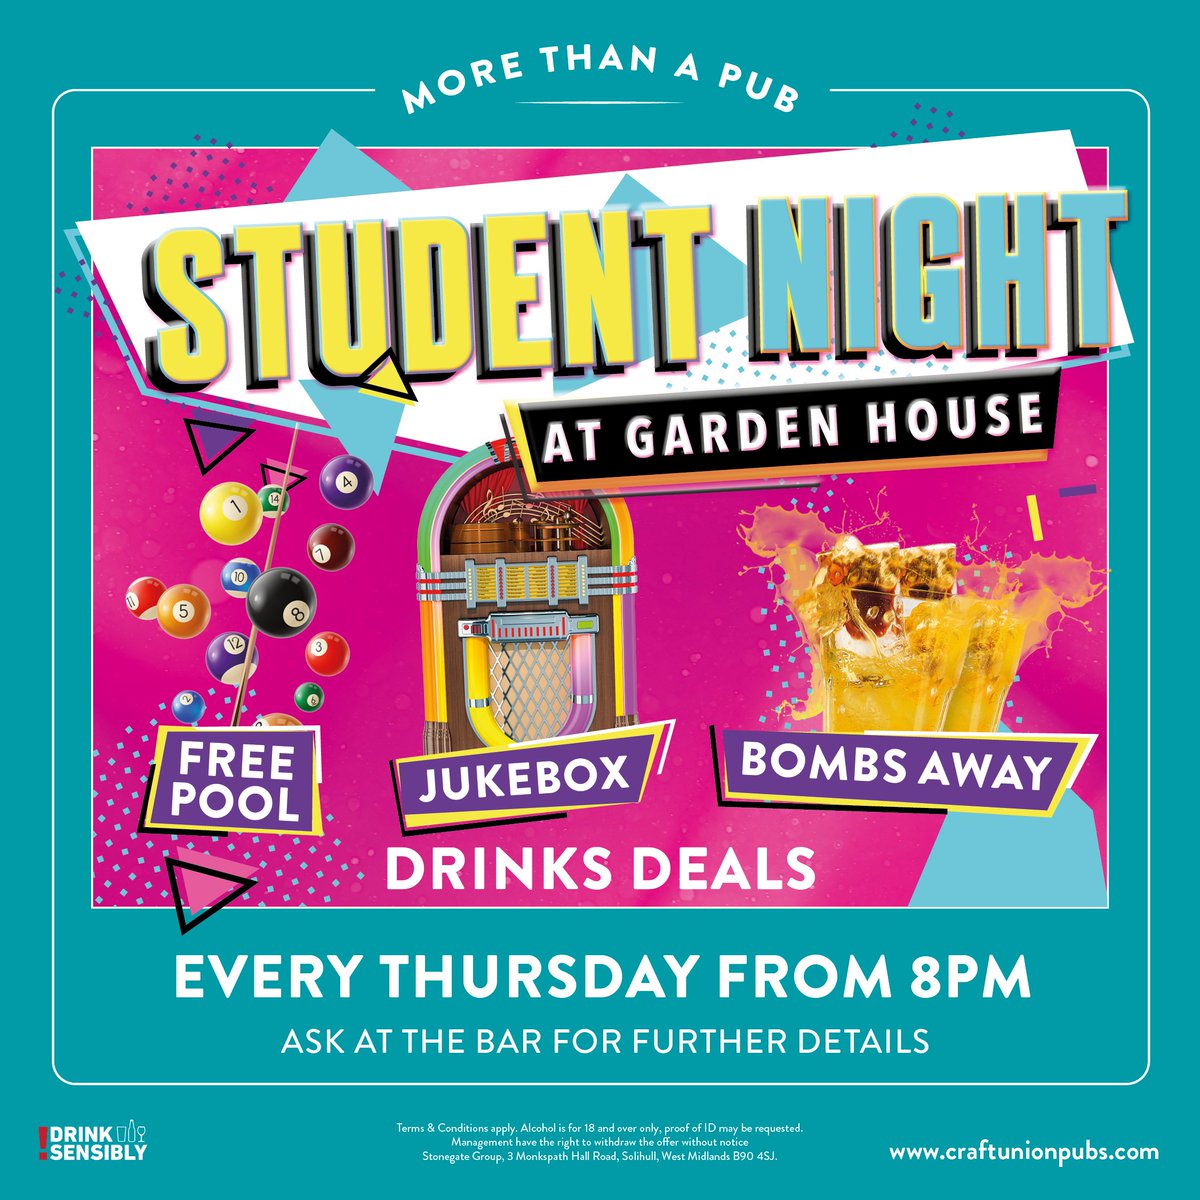 #StudentNights #norwichfreshers2023 #offers #freepool #ThirstyThursdays #nr2 #norwich #StudentLife #Students #studentspubinnorwich #goldentriangle #realaleandciderfestival